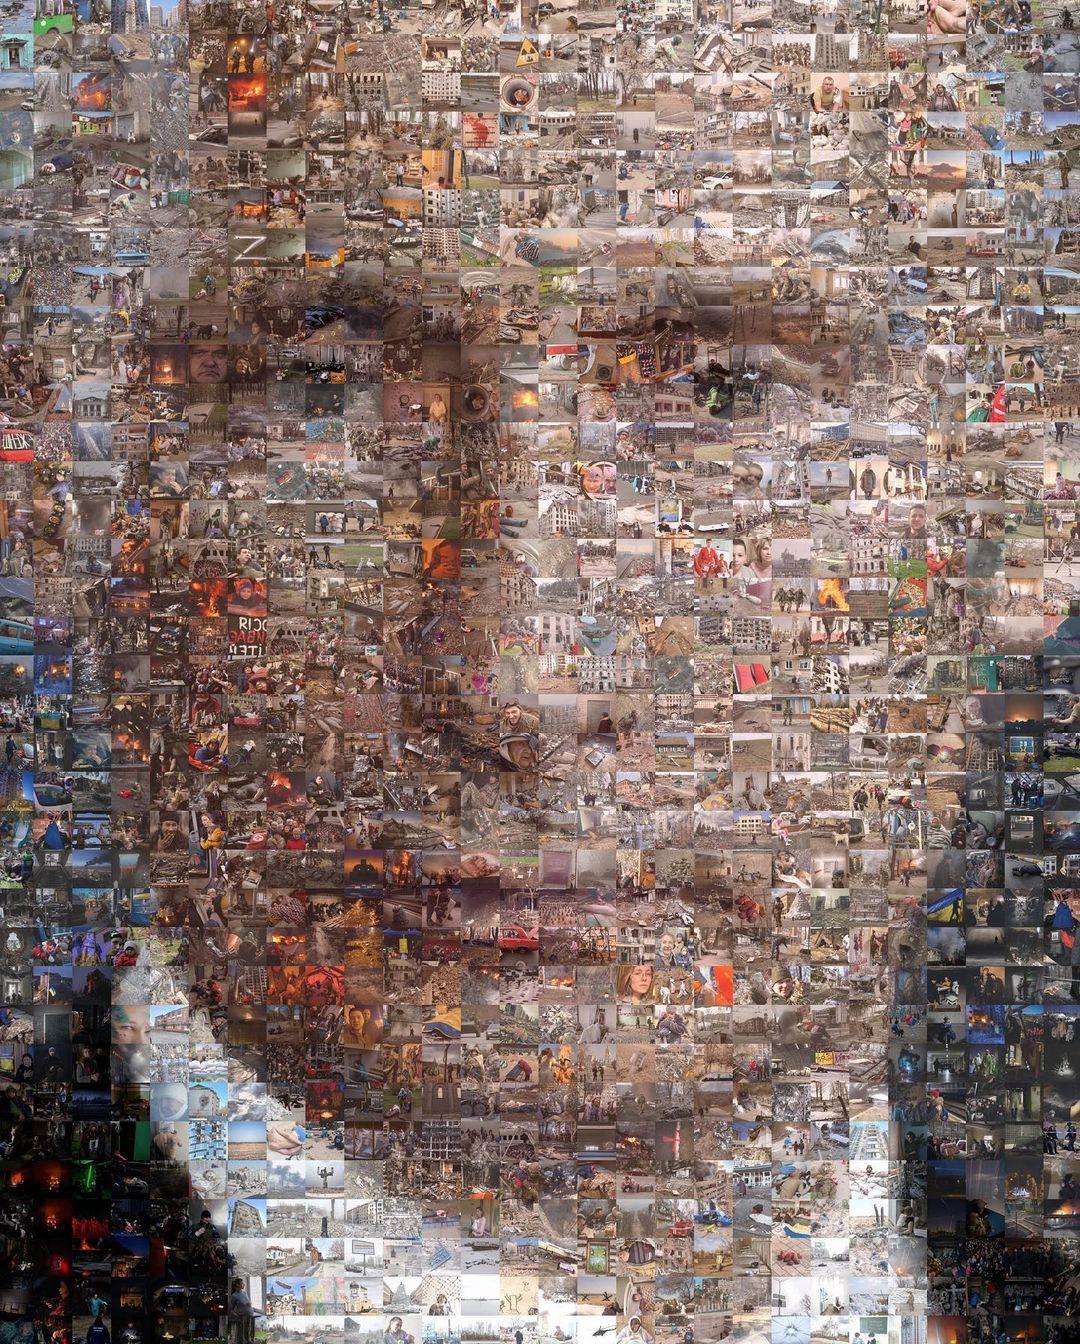 Фотограф Павел Кричко удивил сеть портретом президента РФ Путина / Фото - instagram.com/pkritchko/